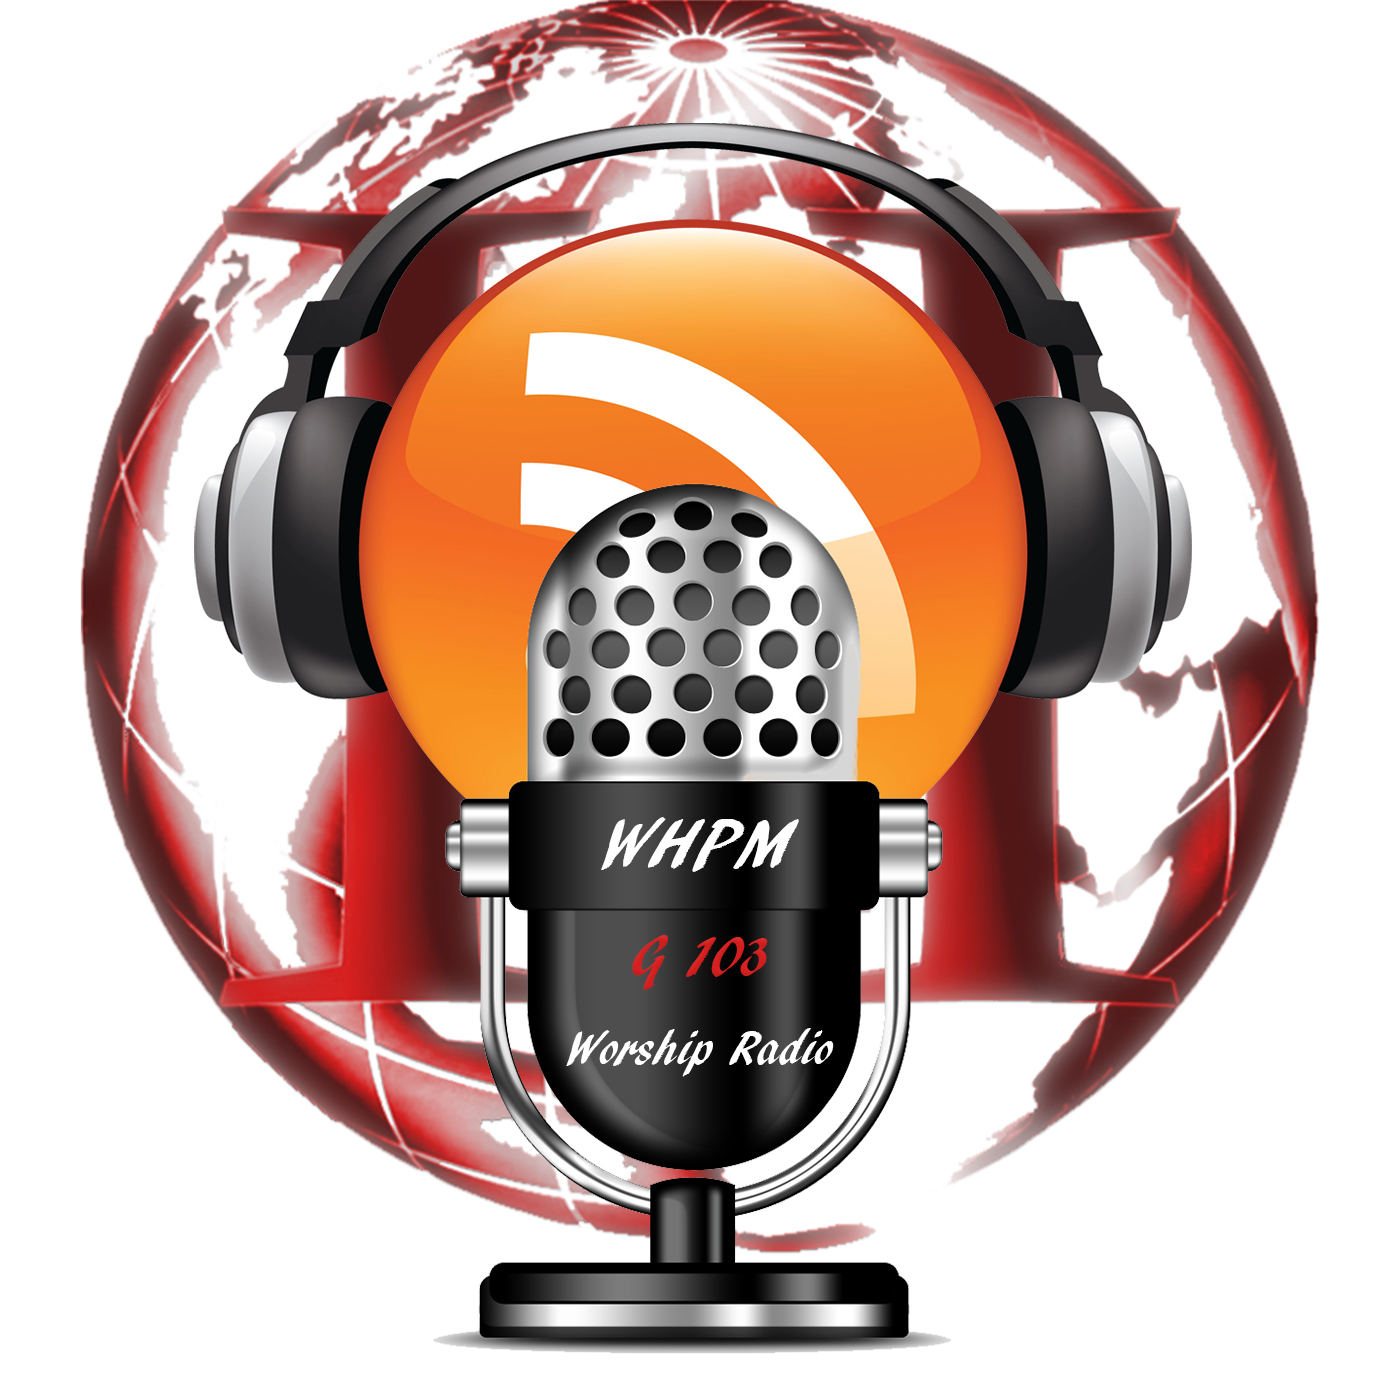 HPM Worship Radio - WHPM - G103: Deitrick Haddon, Ruben Studdard, and Mary Mary: 